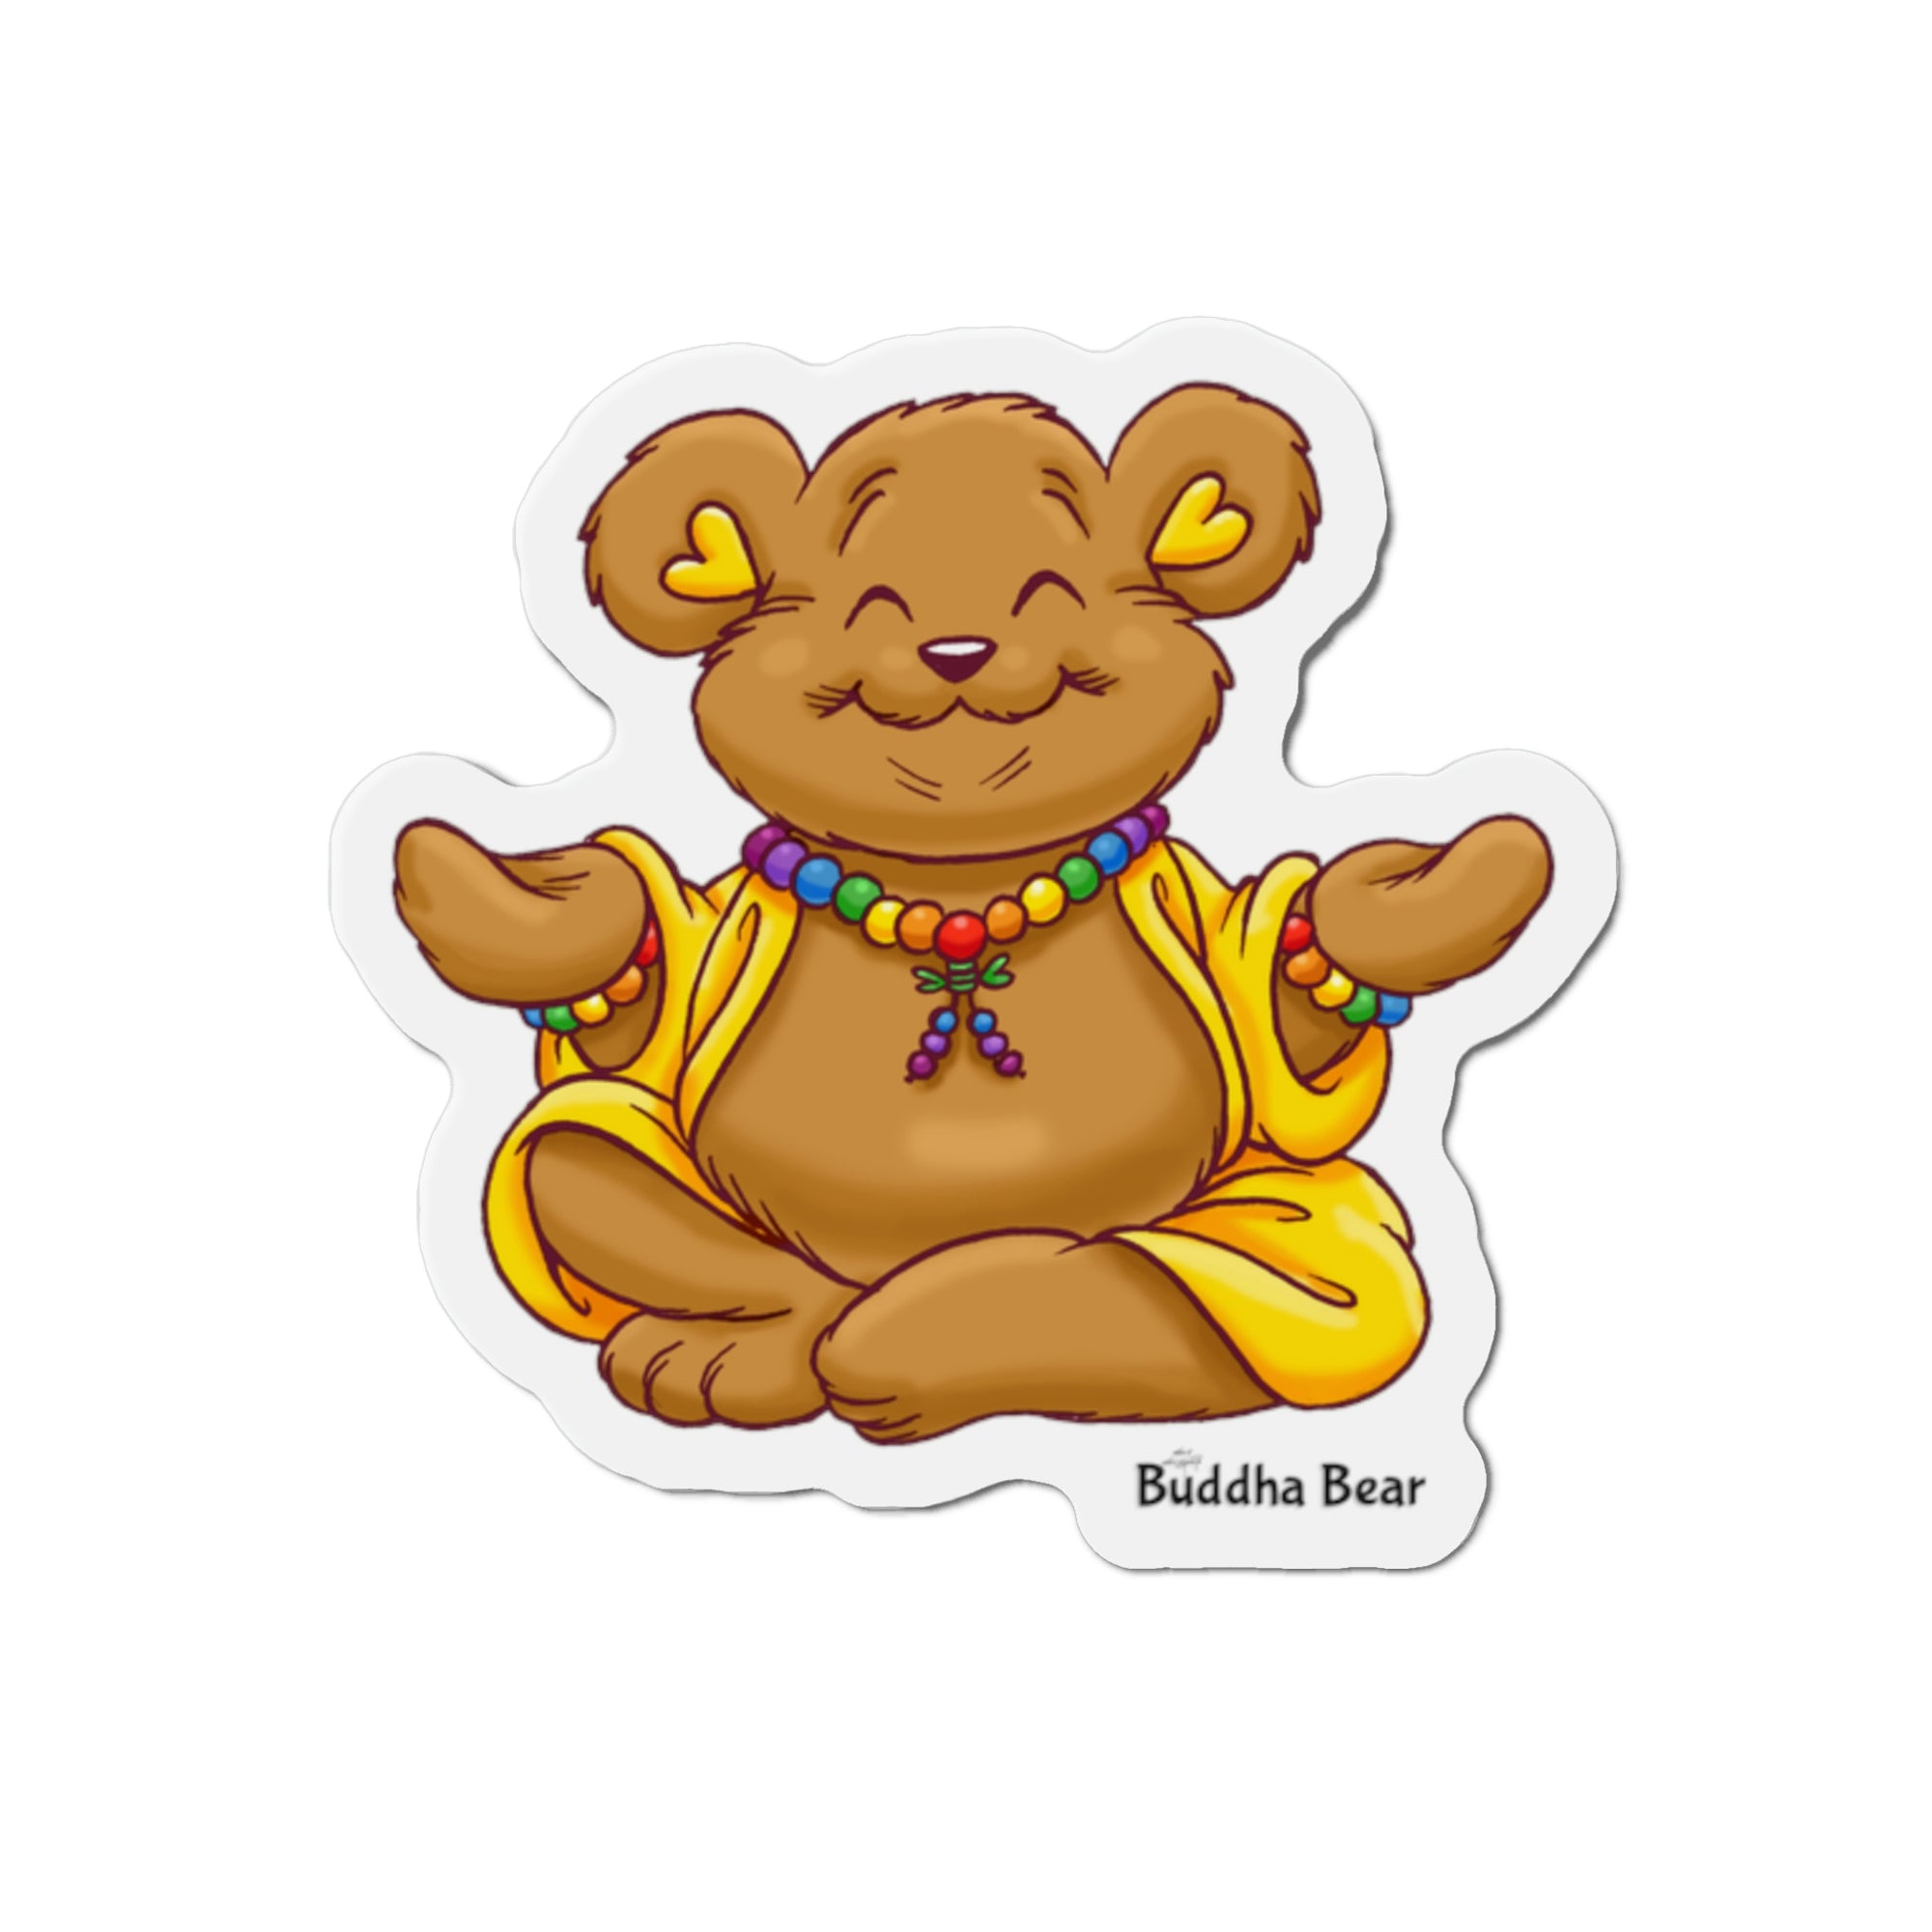 Buddha Bear's Fridge Reminder Magnet